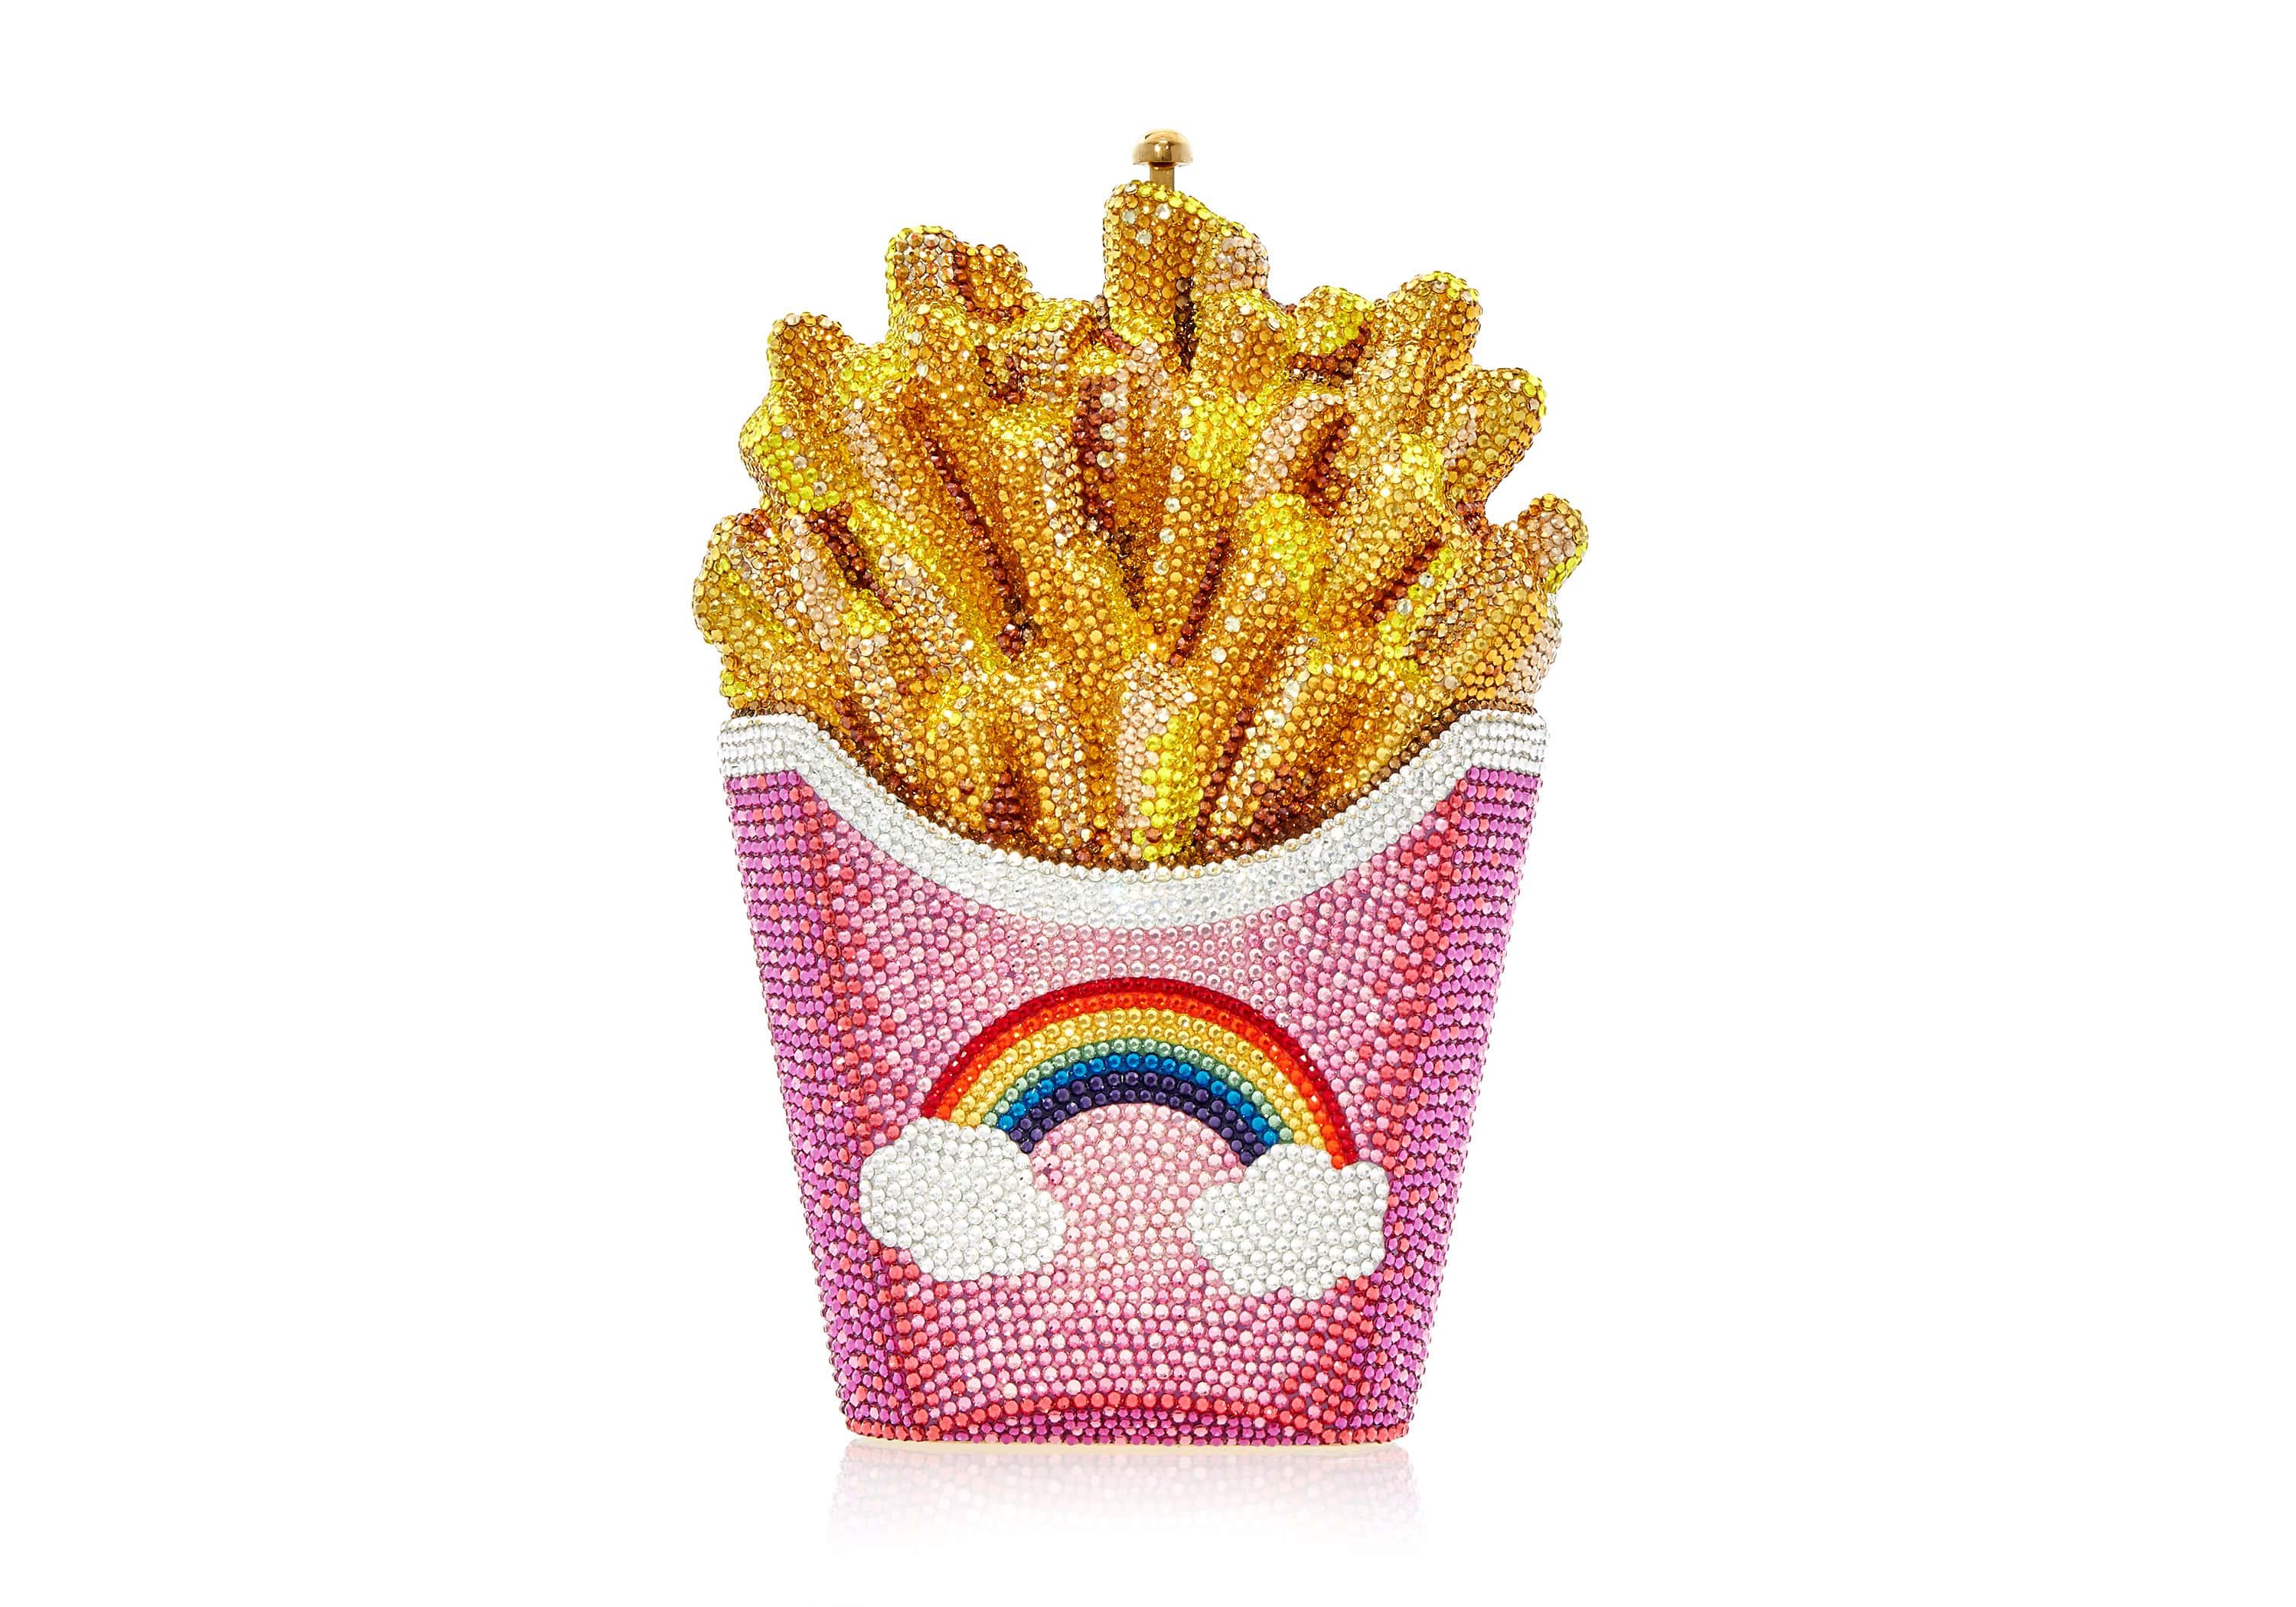 Judith Leiber French Fries Rainbow Clutch Bag